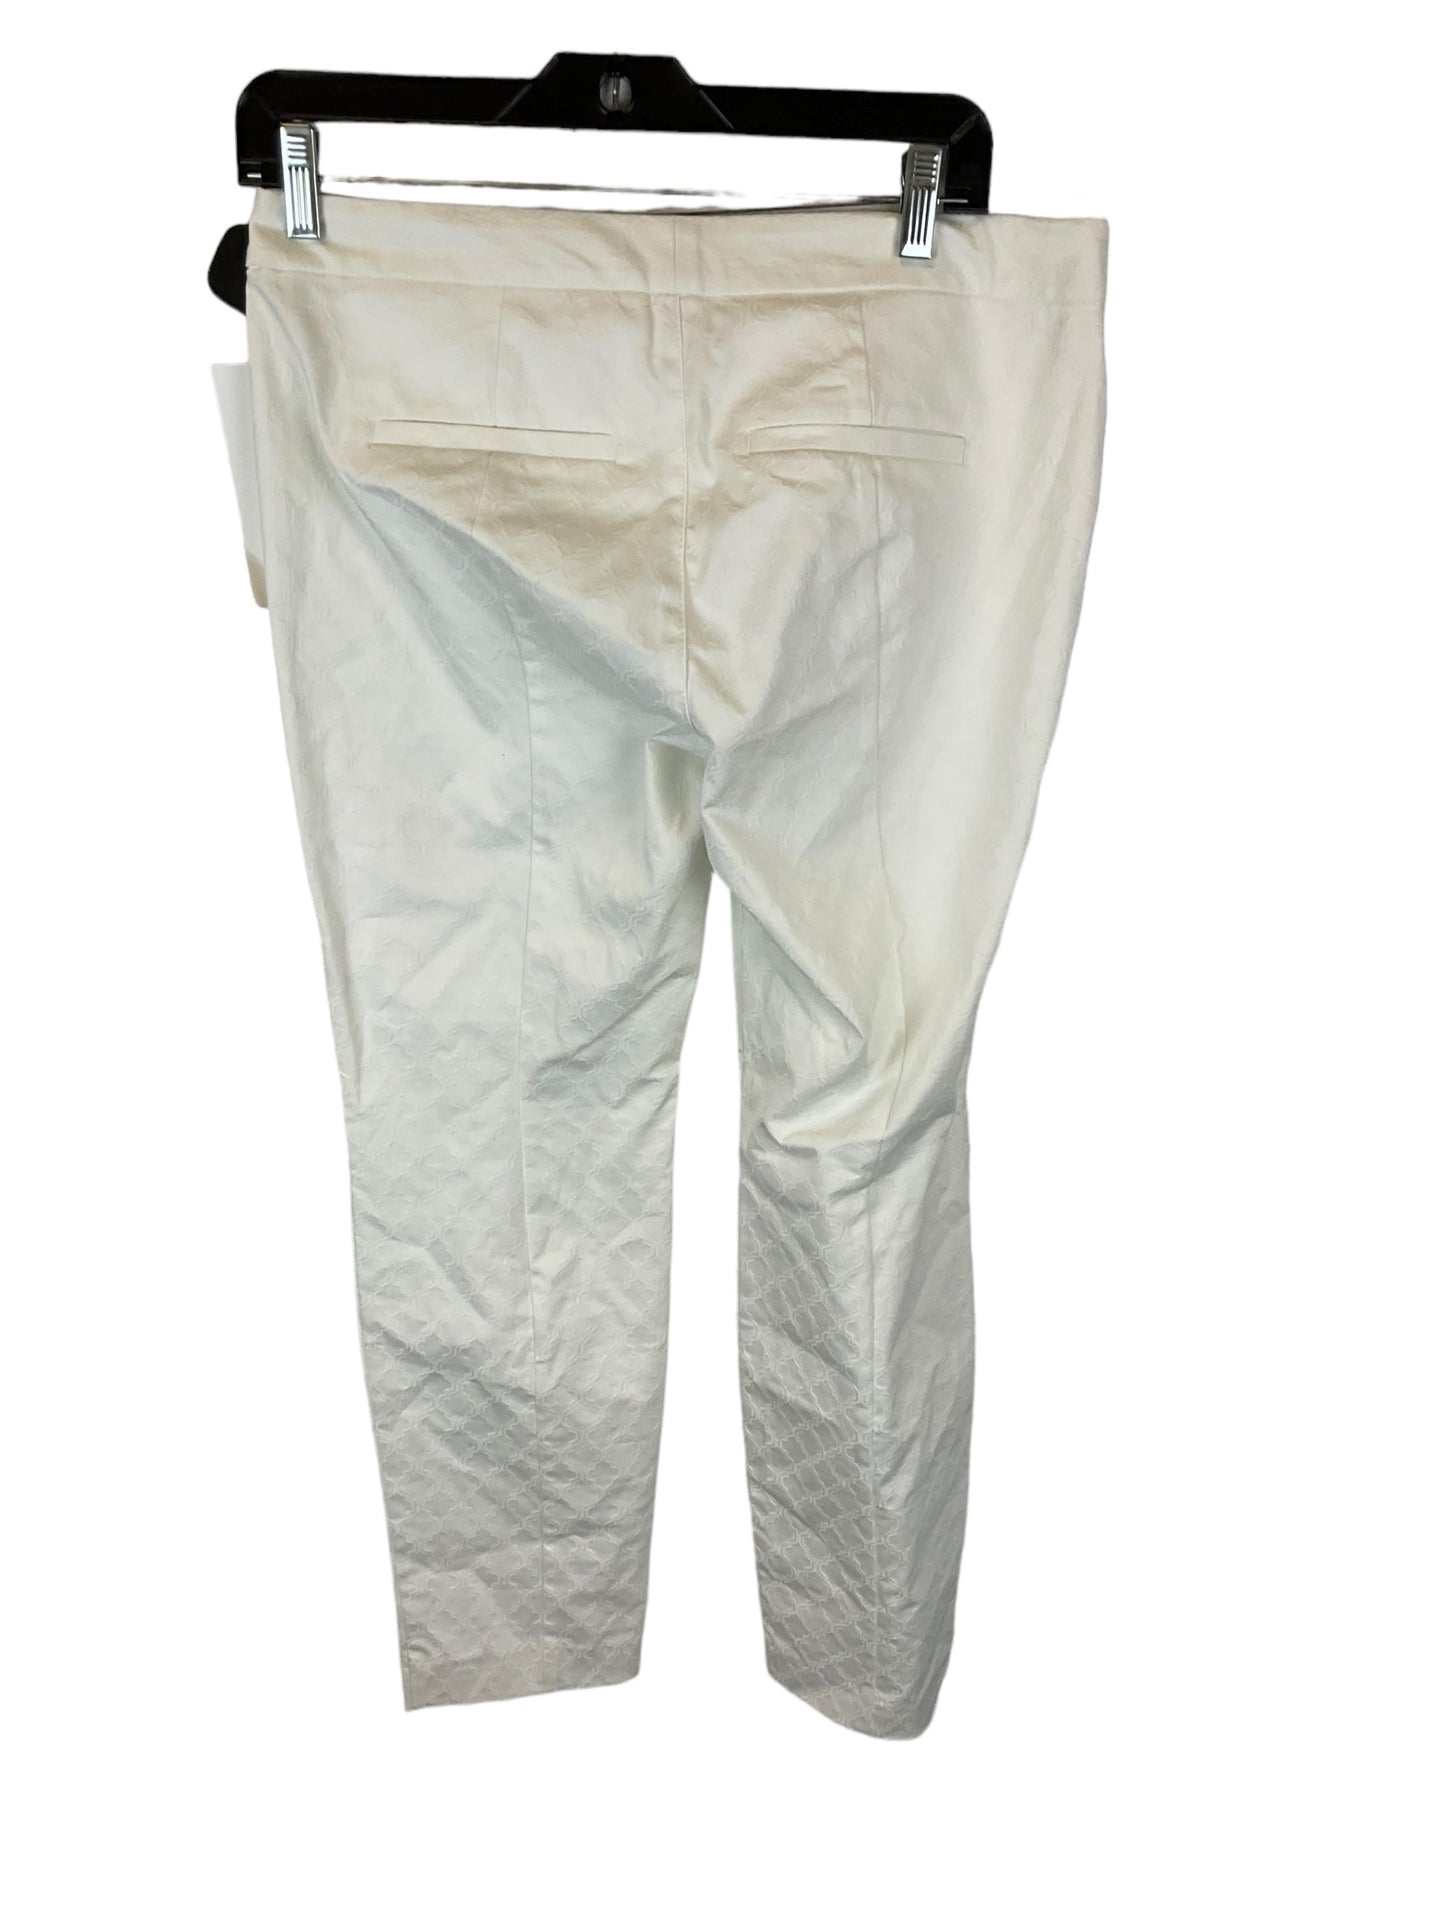 White Pants Designer Lilly Pulitzer, Size 6